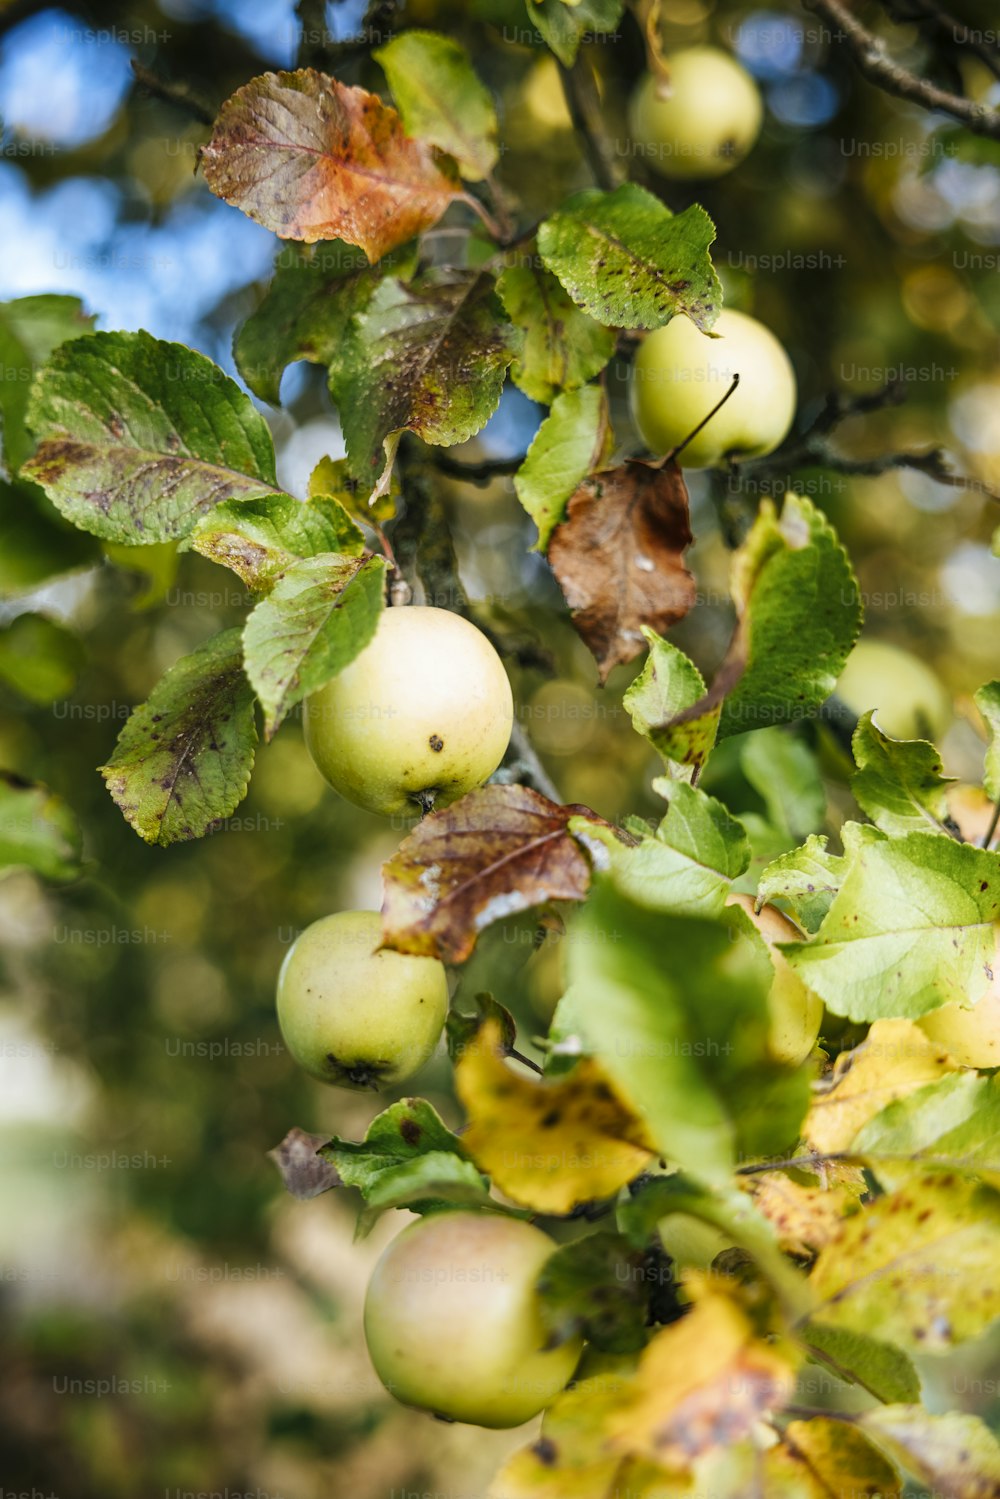 Un ramo de manzanas colgando de un árbol